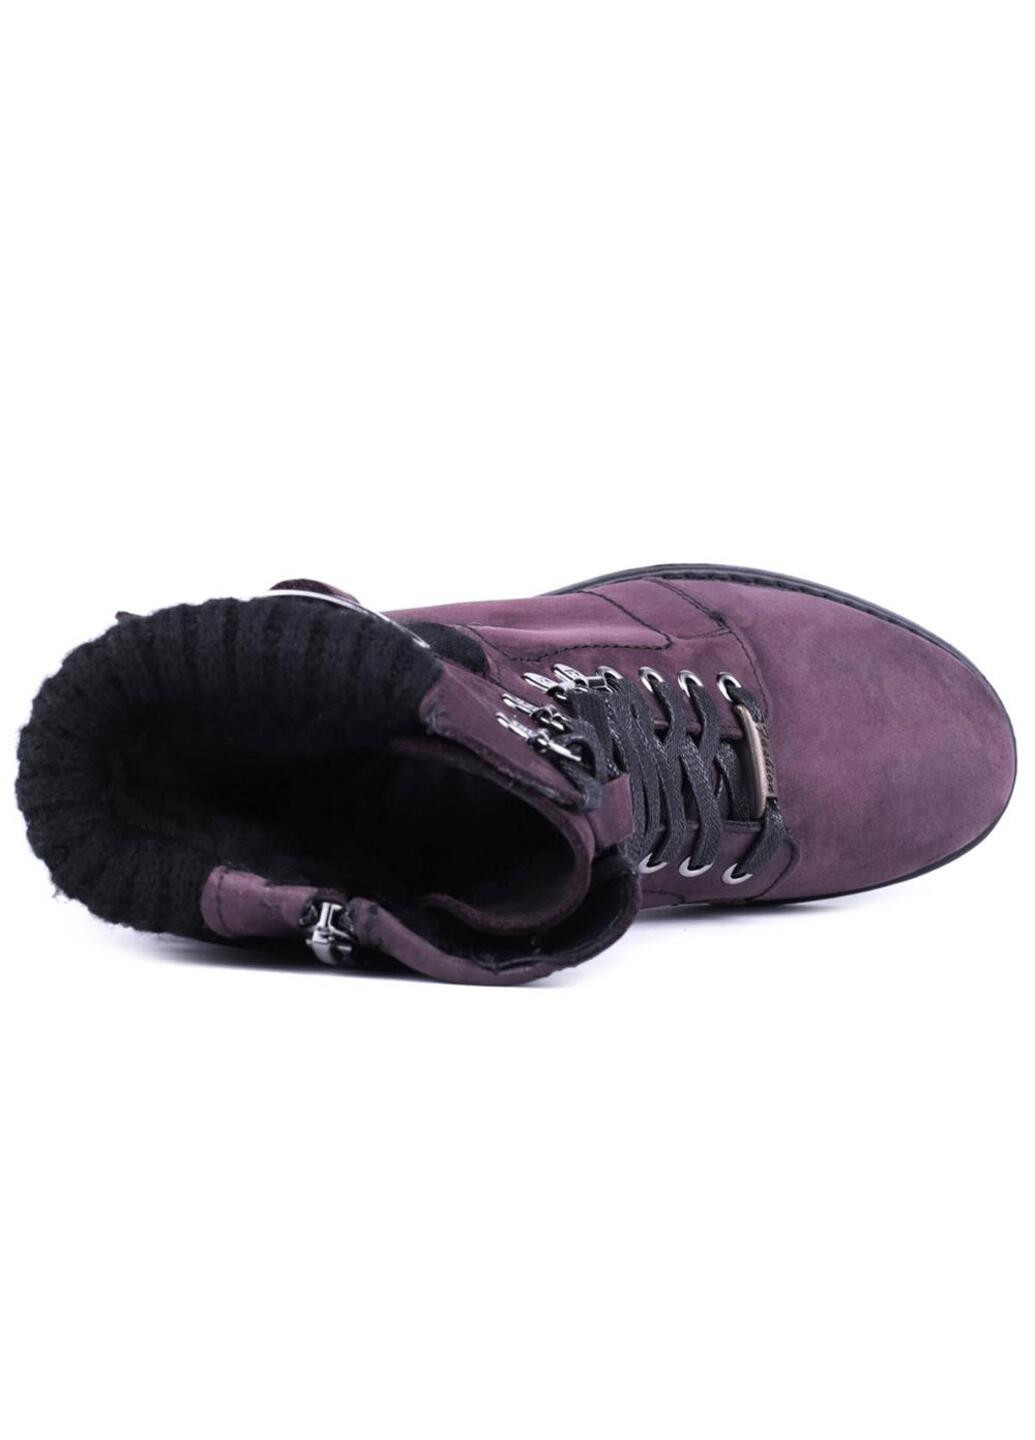 Зимние ботинки женские бренда 8500845_(626ш) Mida